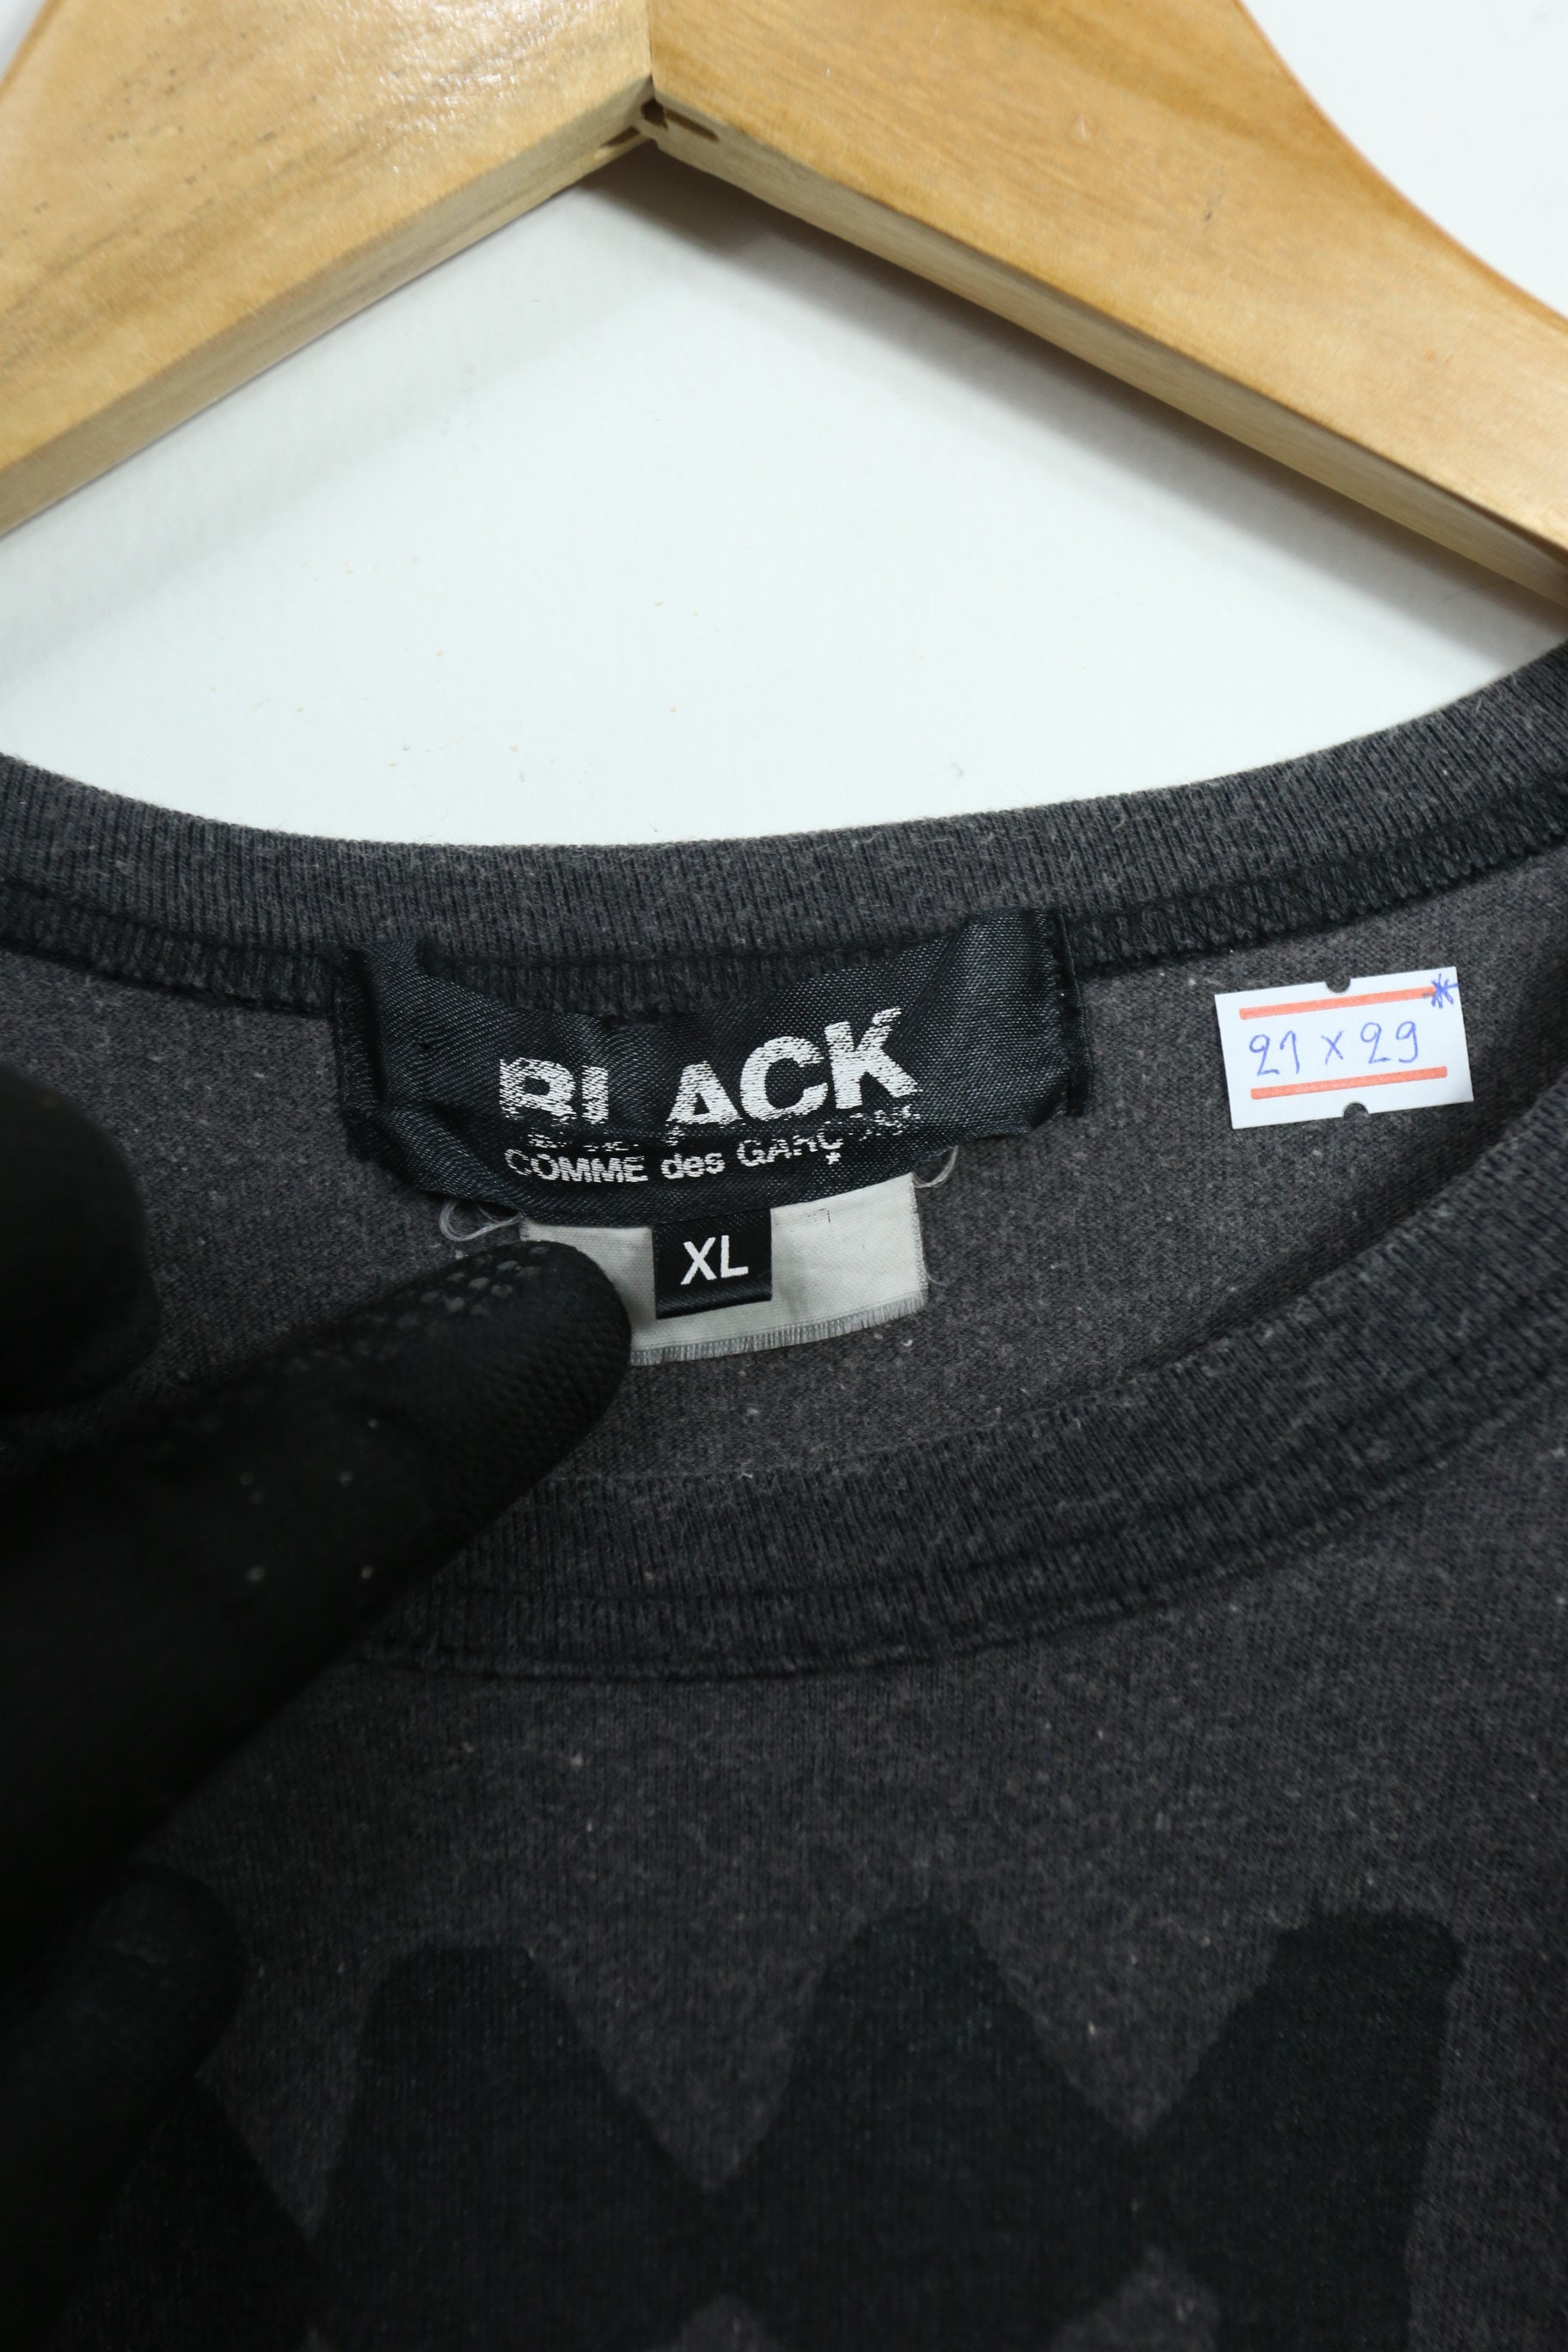 BLACK Comme des Garcons CDG T shirt XL GTMB224 | Etsy